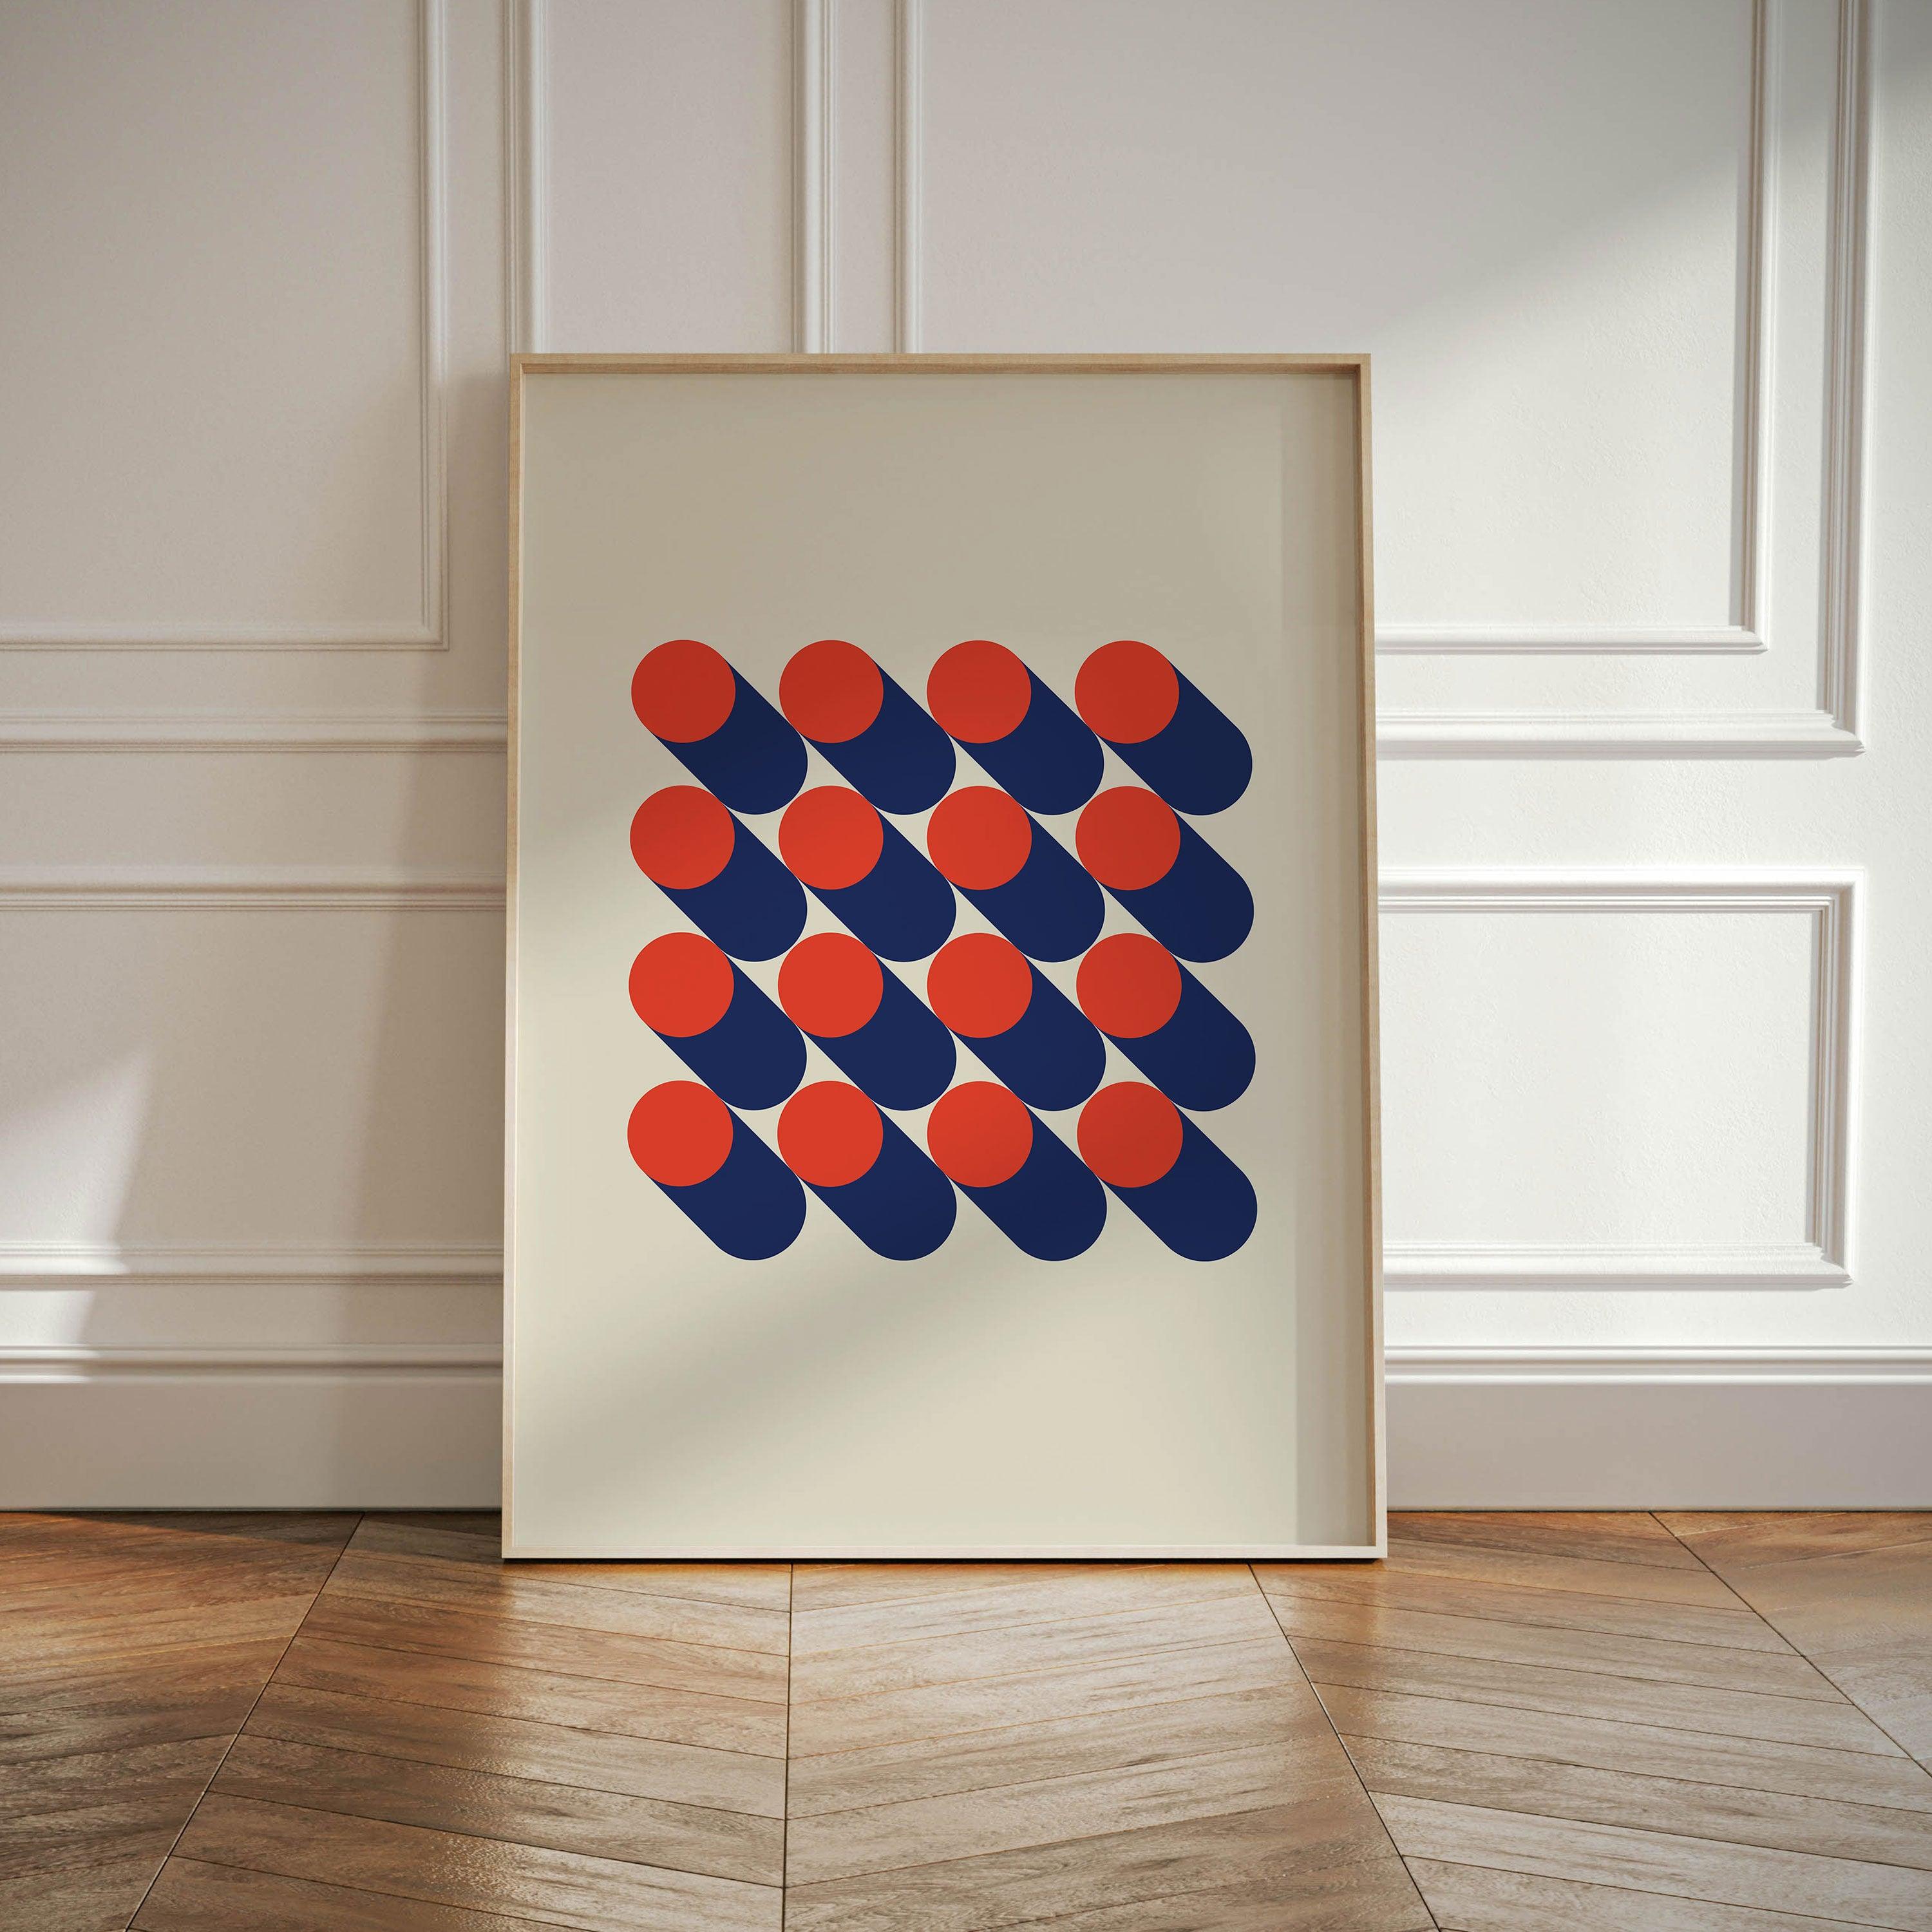 Bauhaus Red Dots - stravee - Wall Art Print